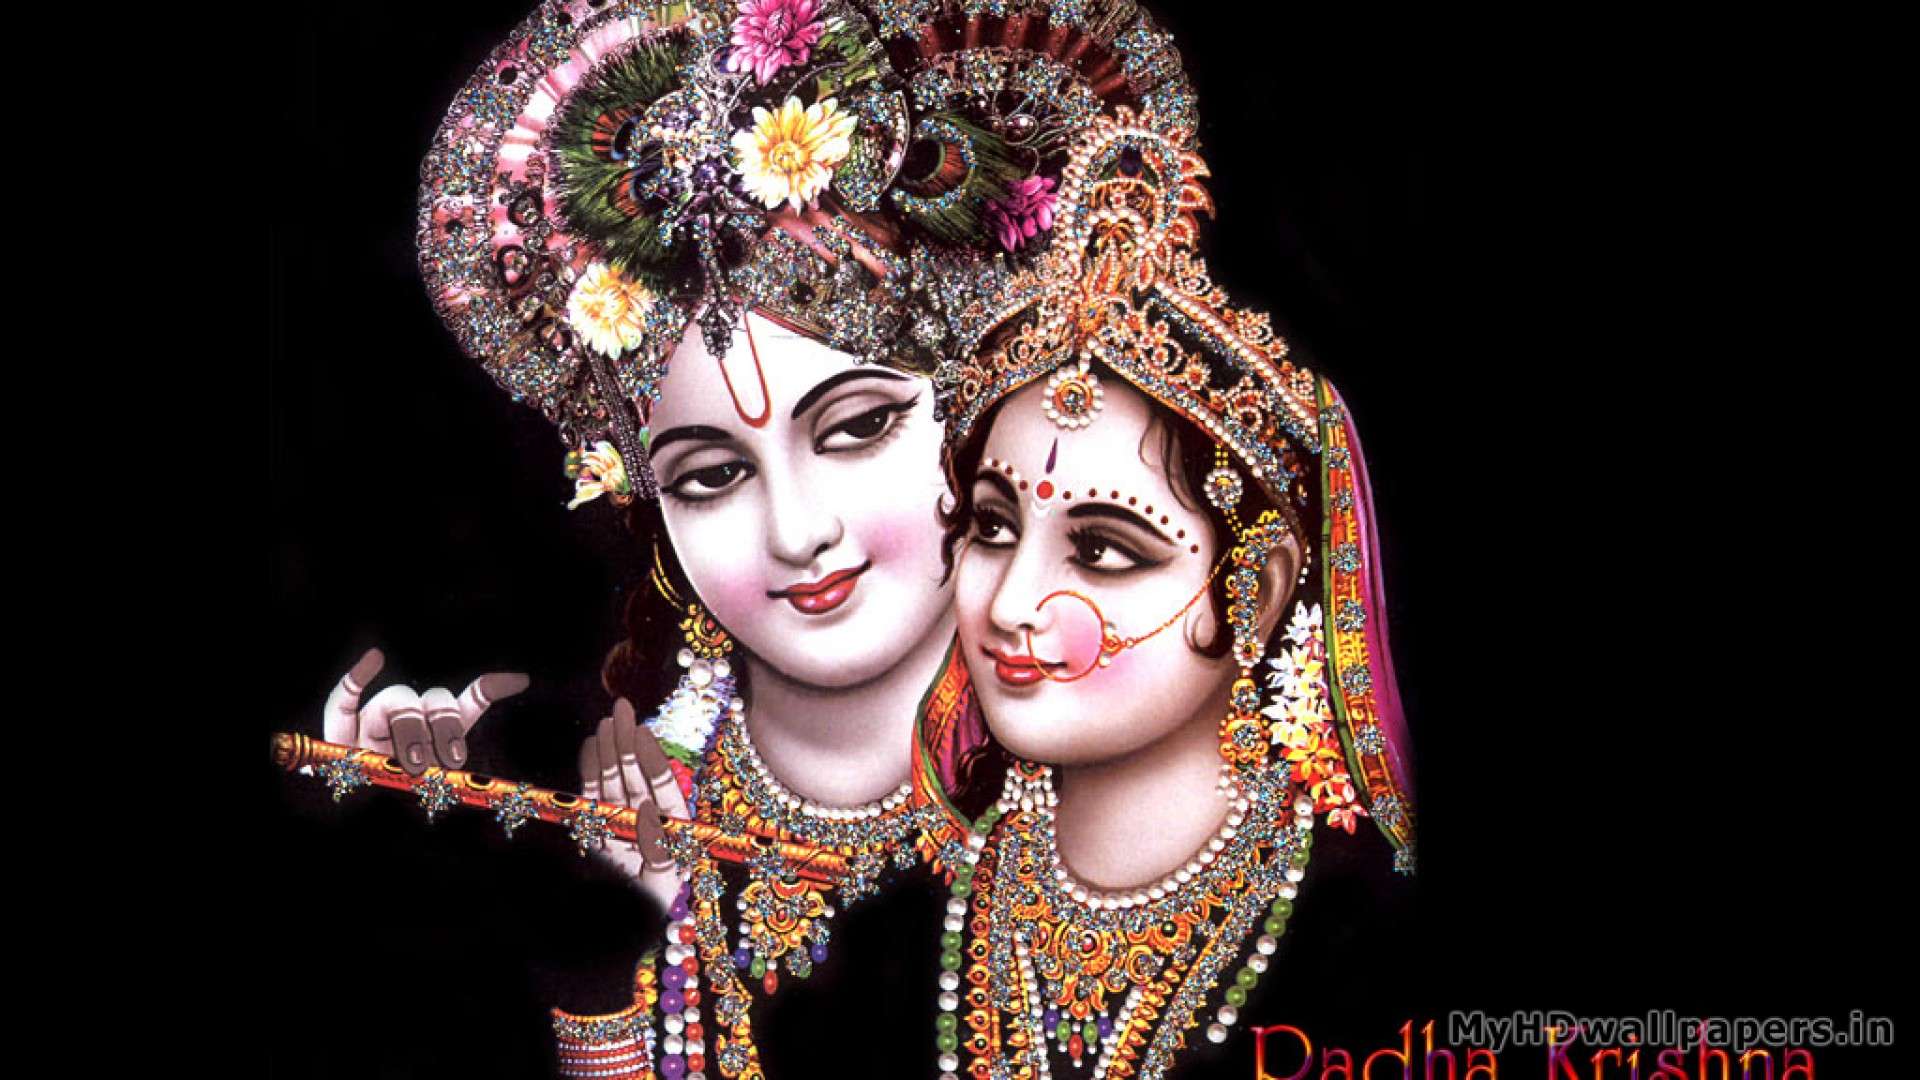 Lord Krishna Wallpapers High Resolution - WallpaperSafari